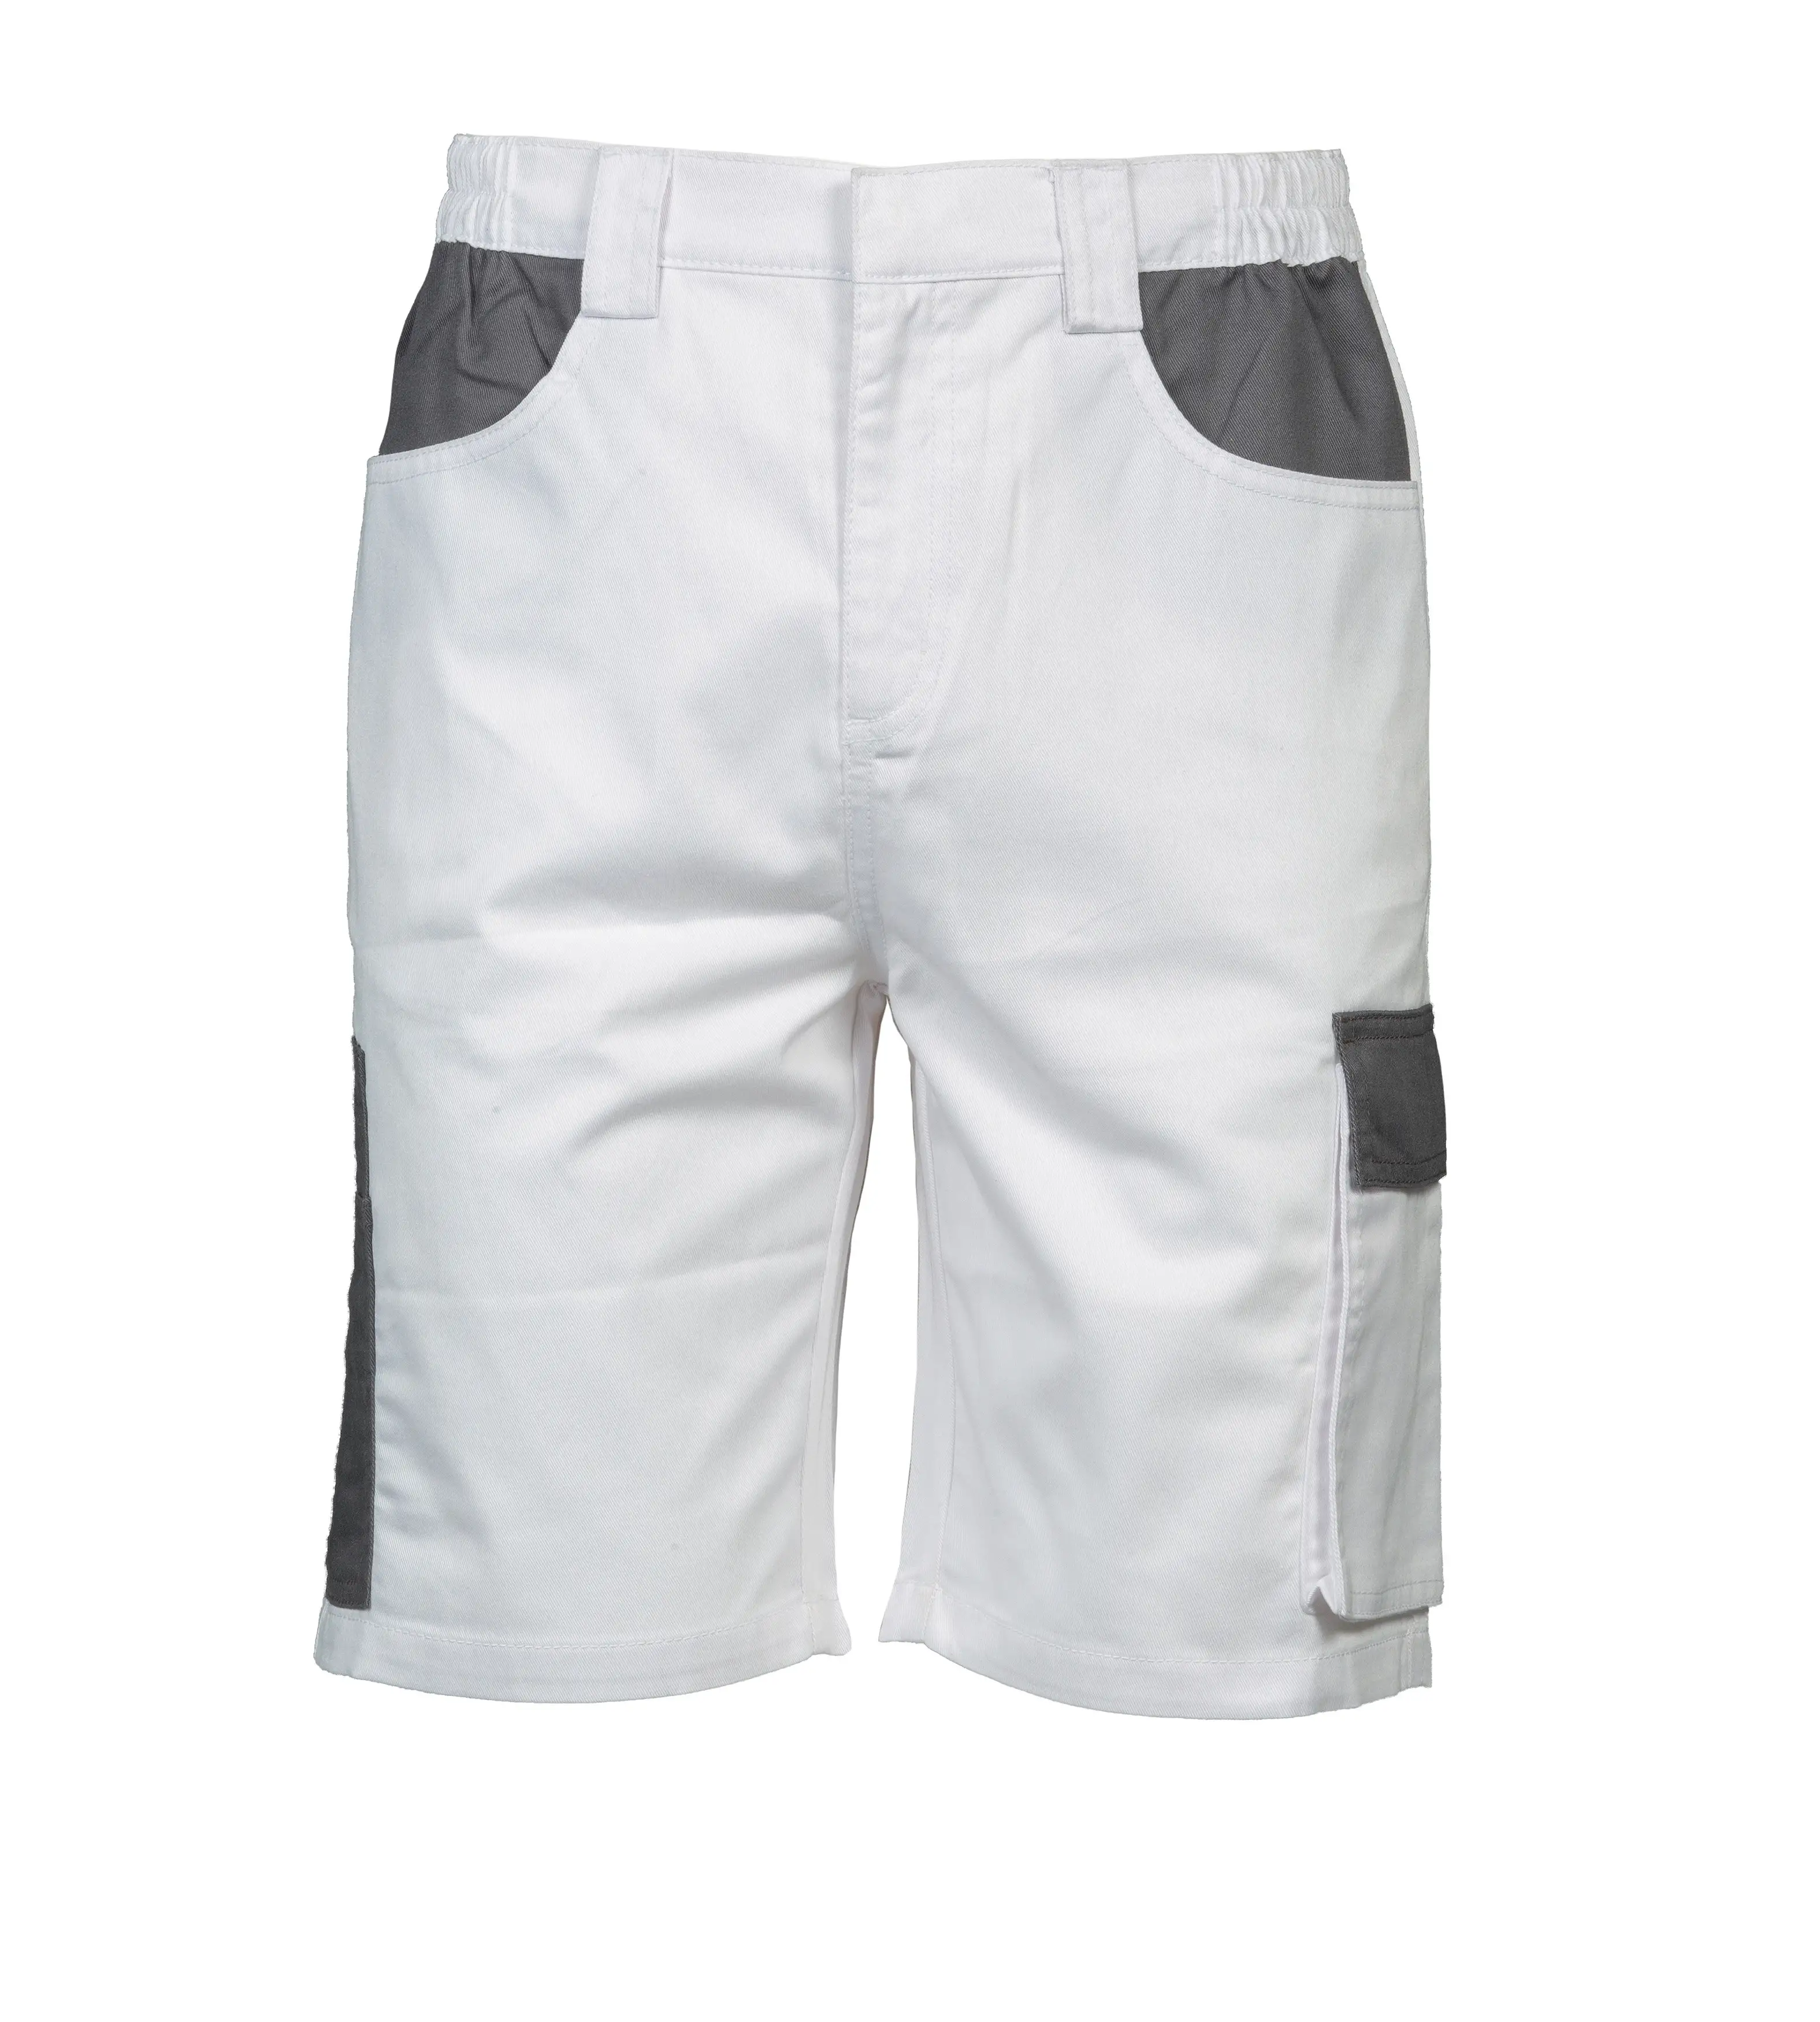 Pantalone tiziano - white - m